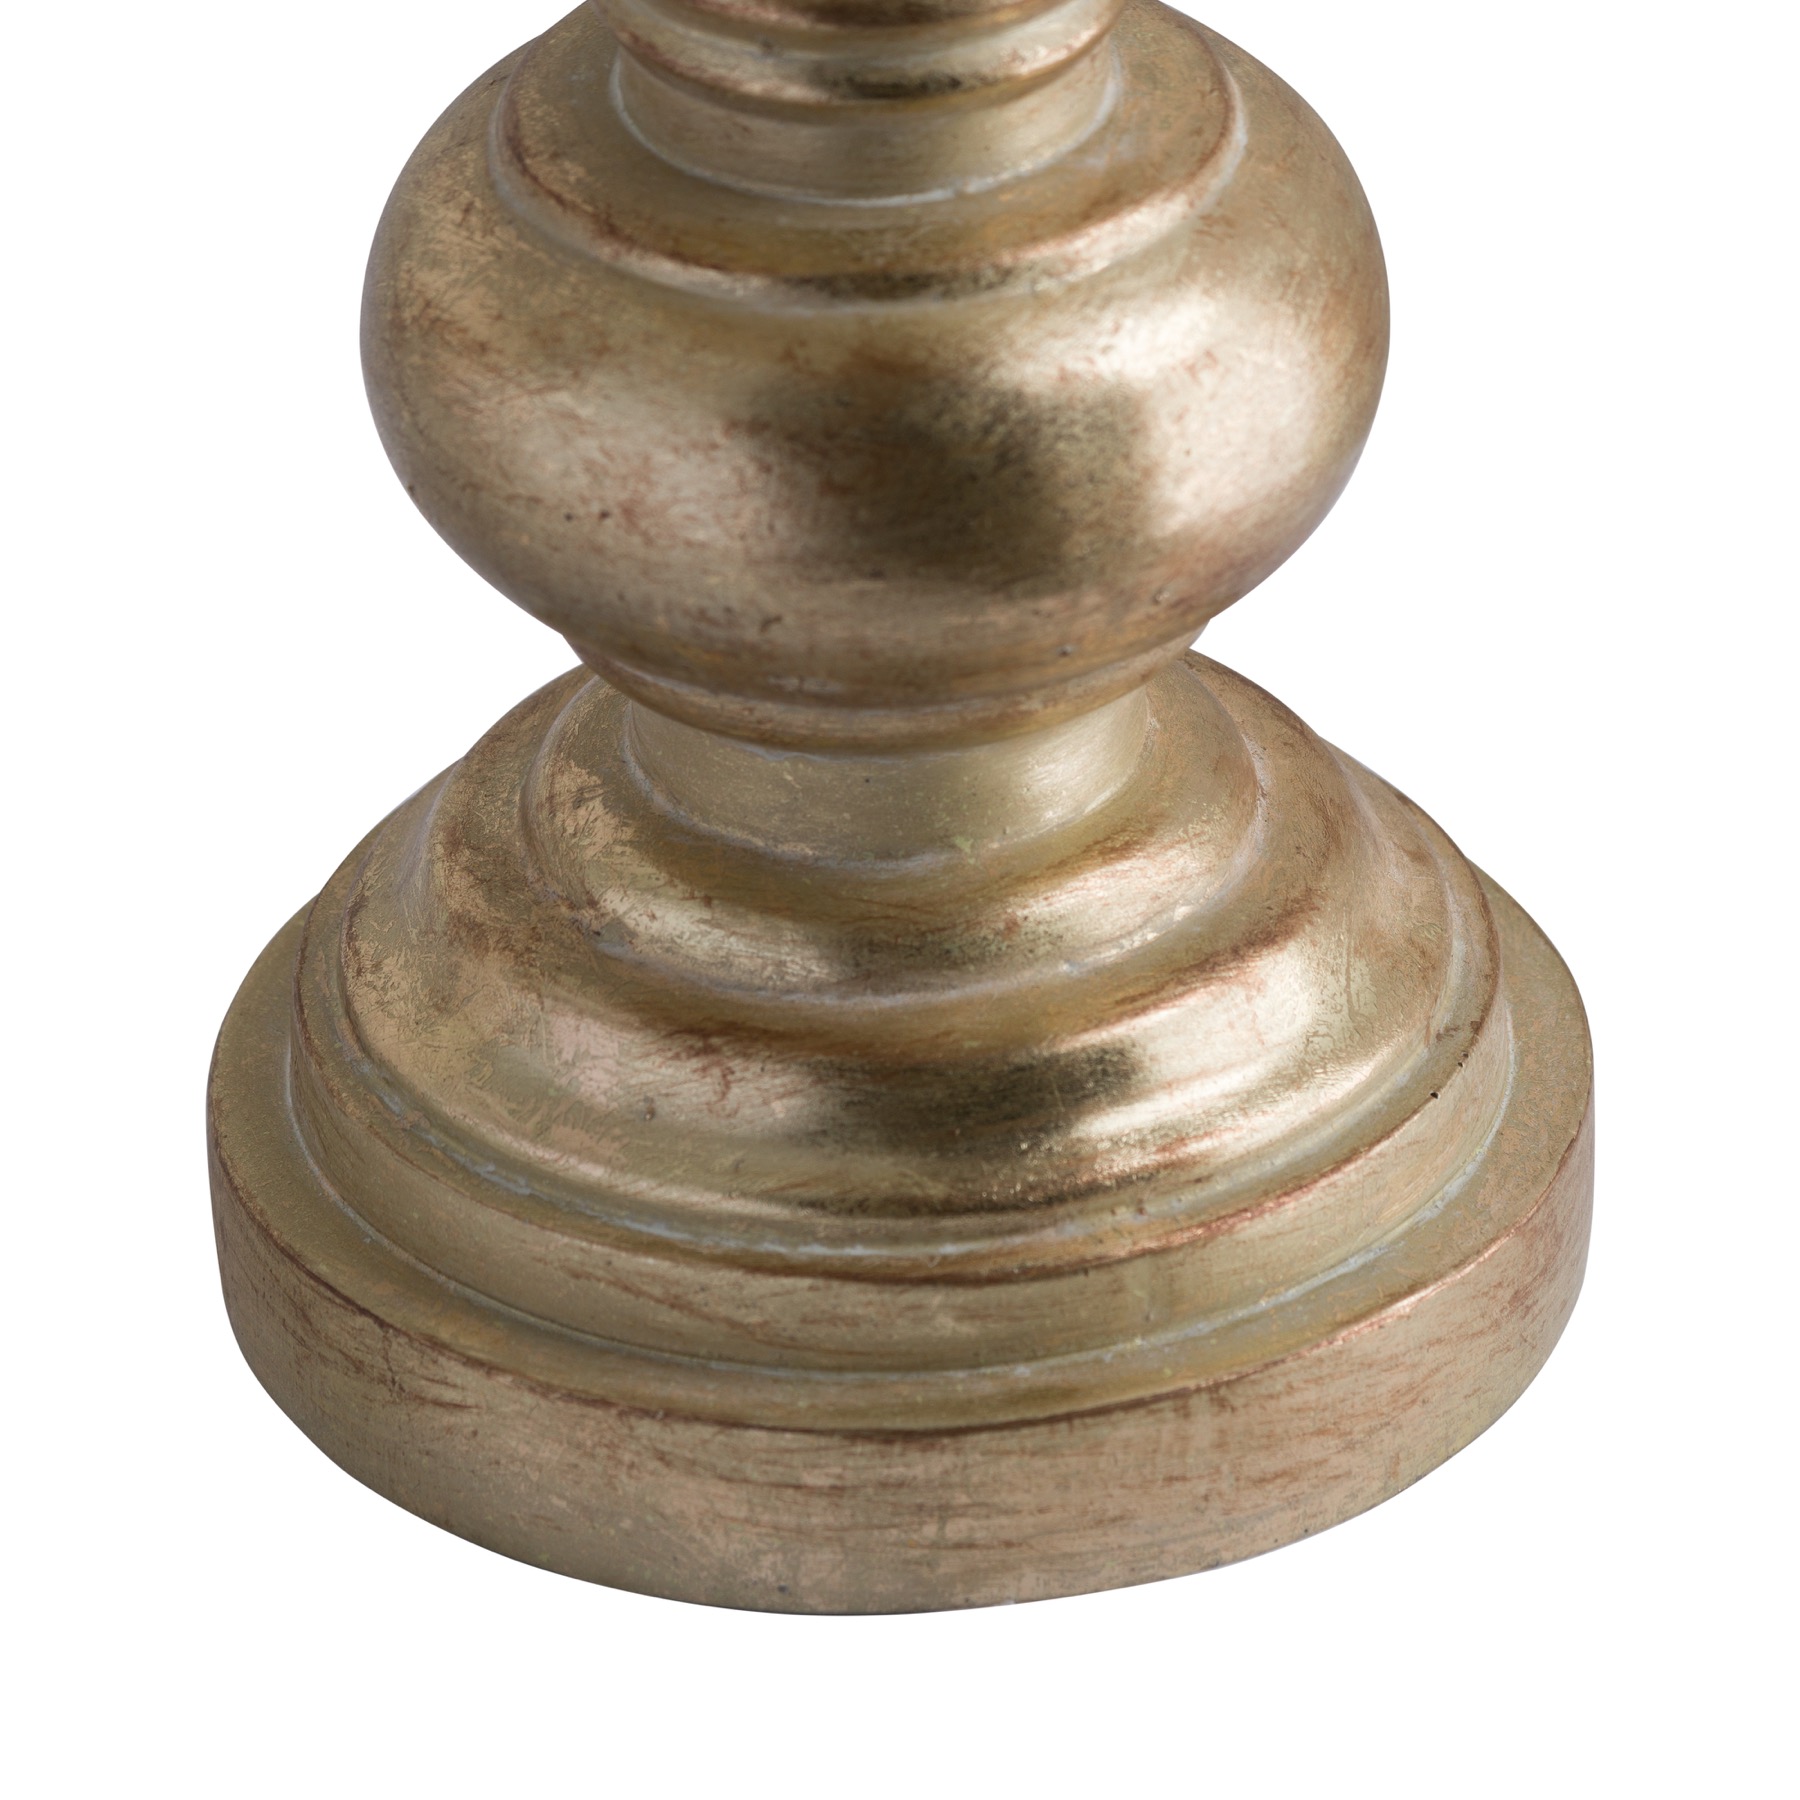 Antique Brass Effect Squat Candle Holder - Image 2